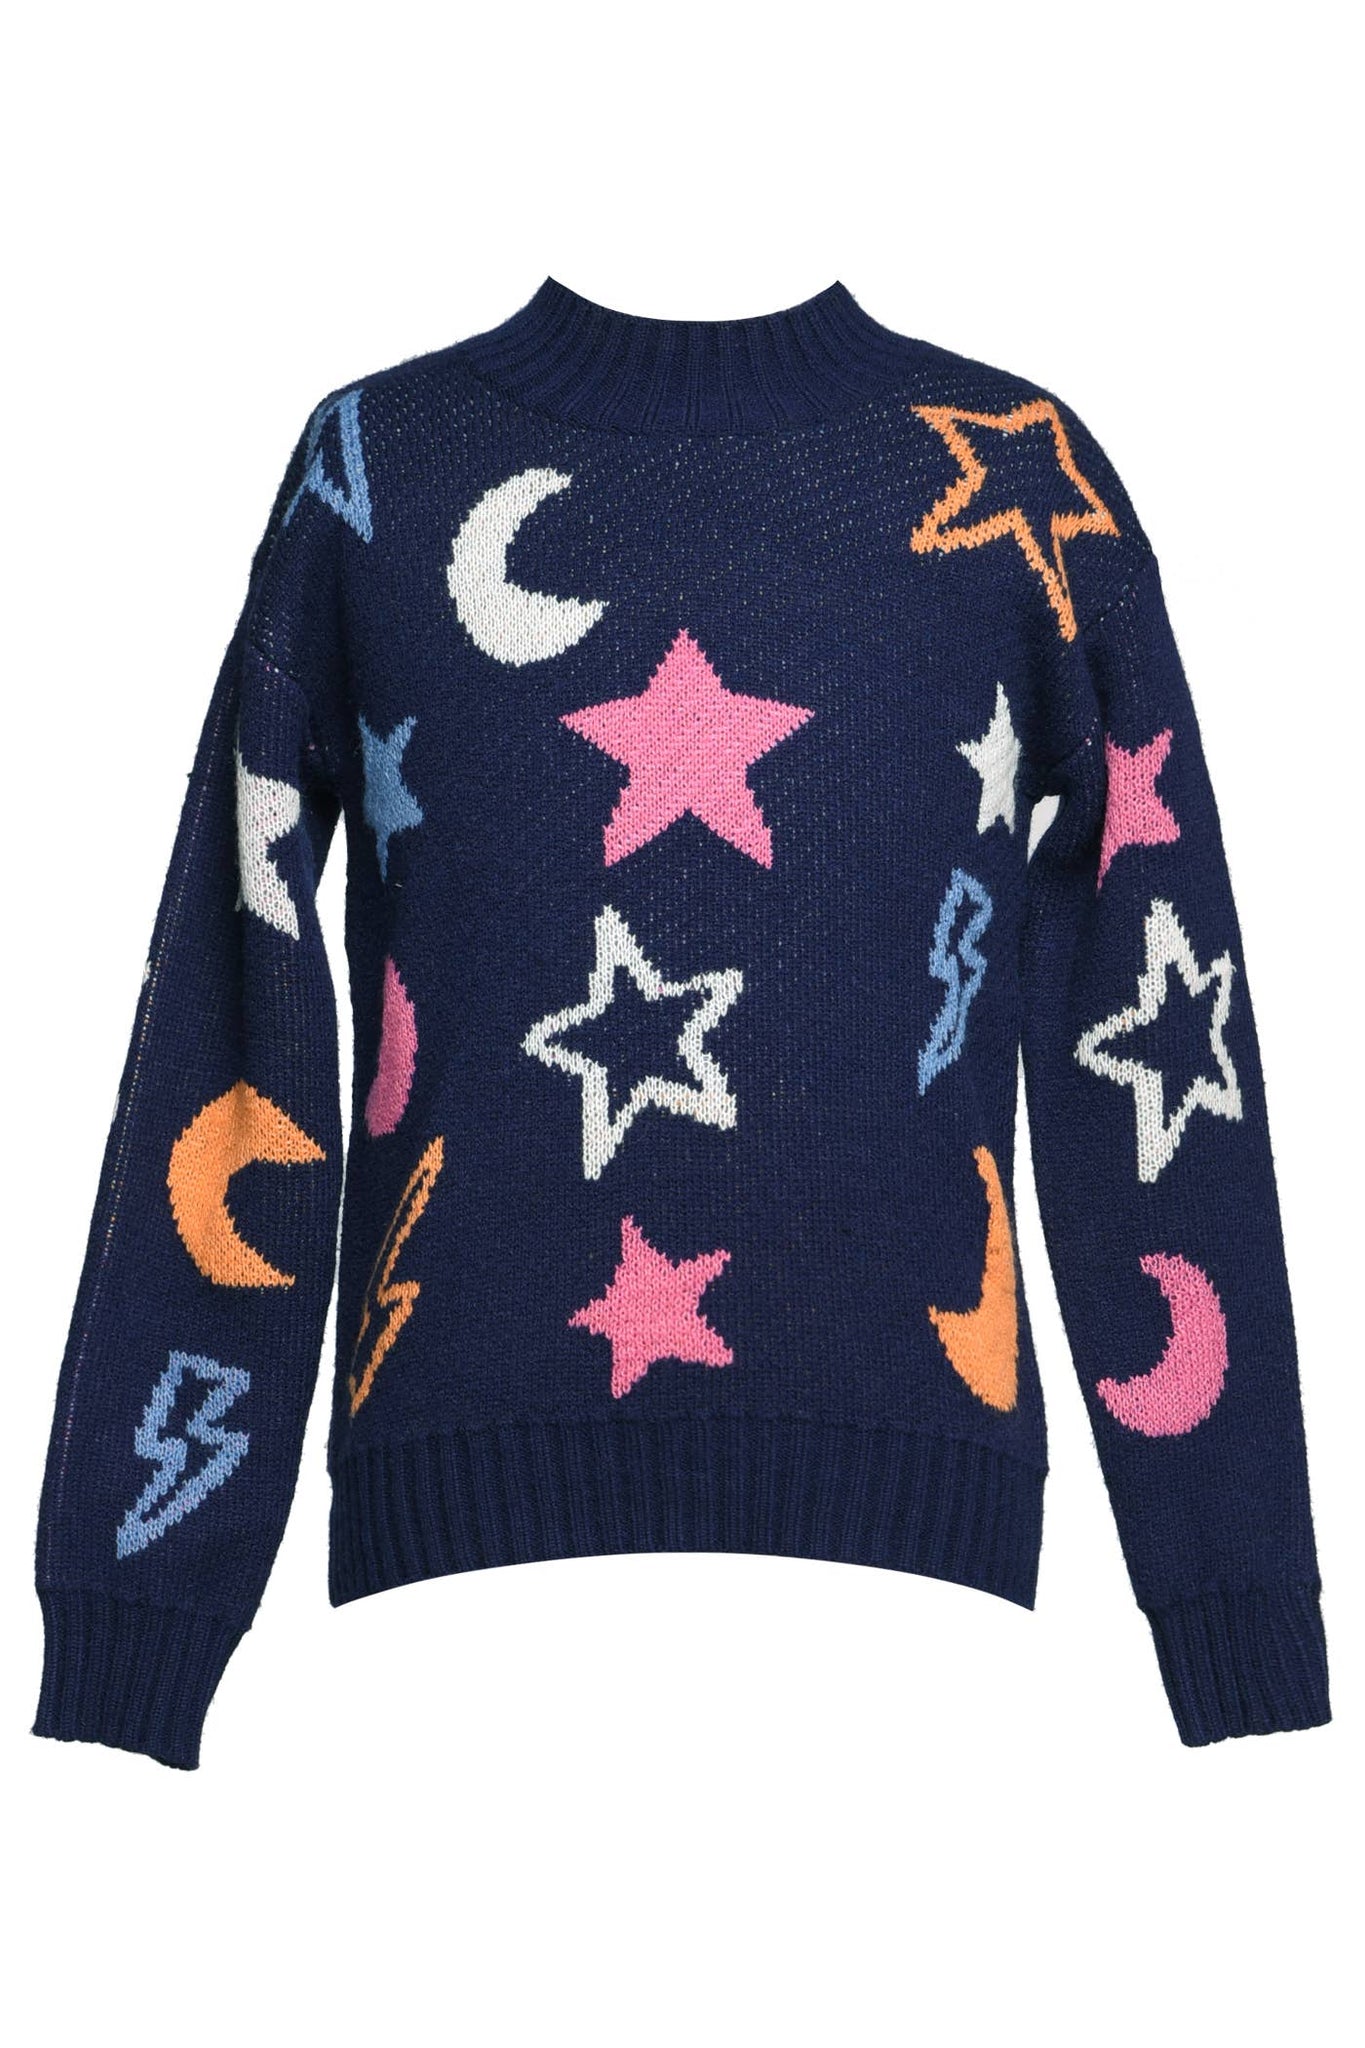 *Sweater W/Moon Star & Lightning Bolt